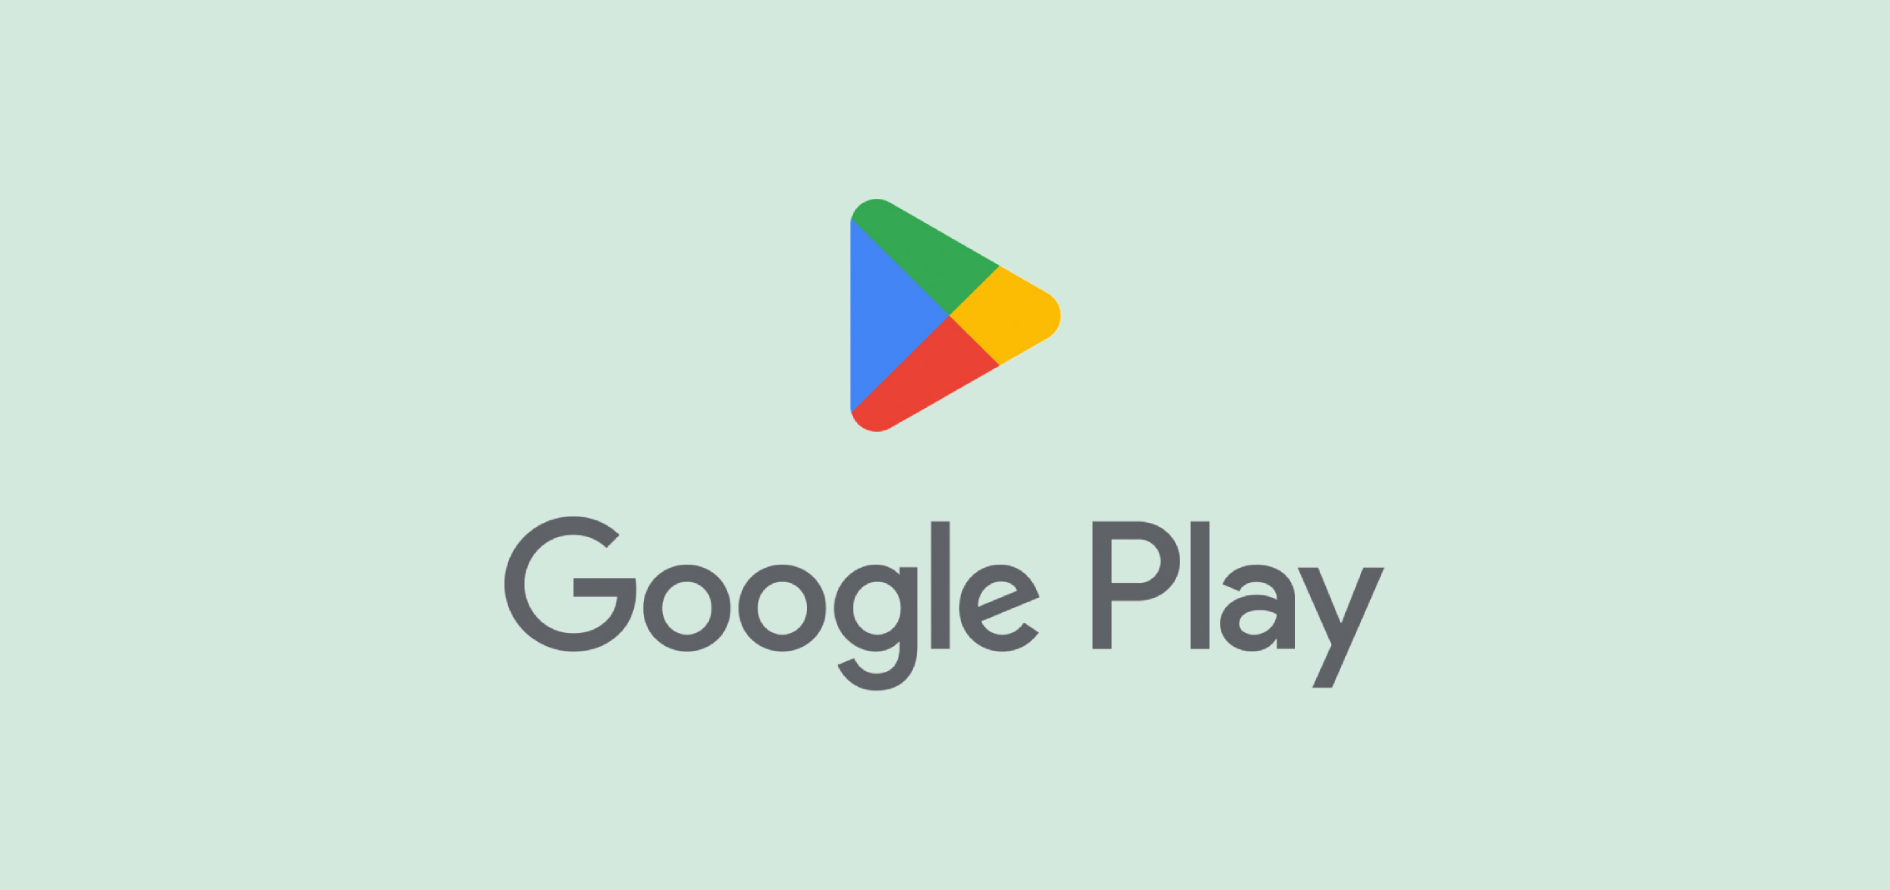 Приложение google play отзывы. Google Play. Значок Google Play. Google Play Market лого. Иконка Google Play без фона.